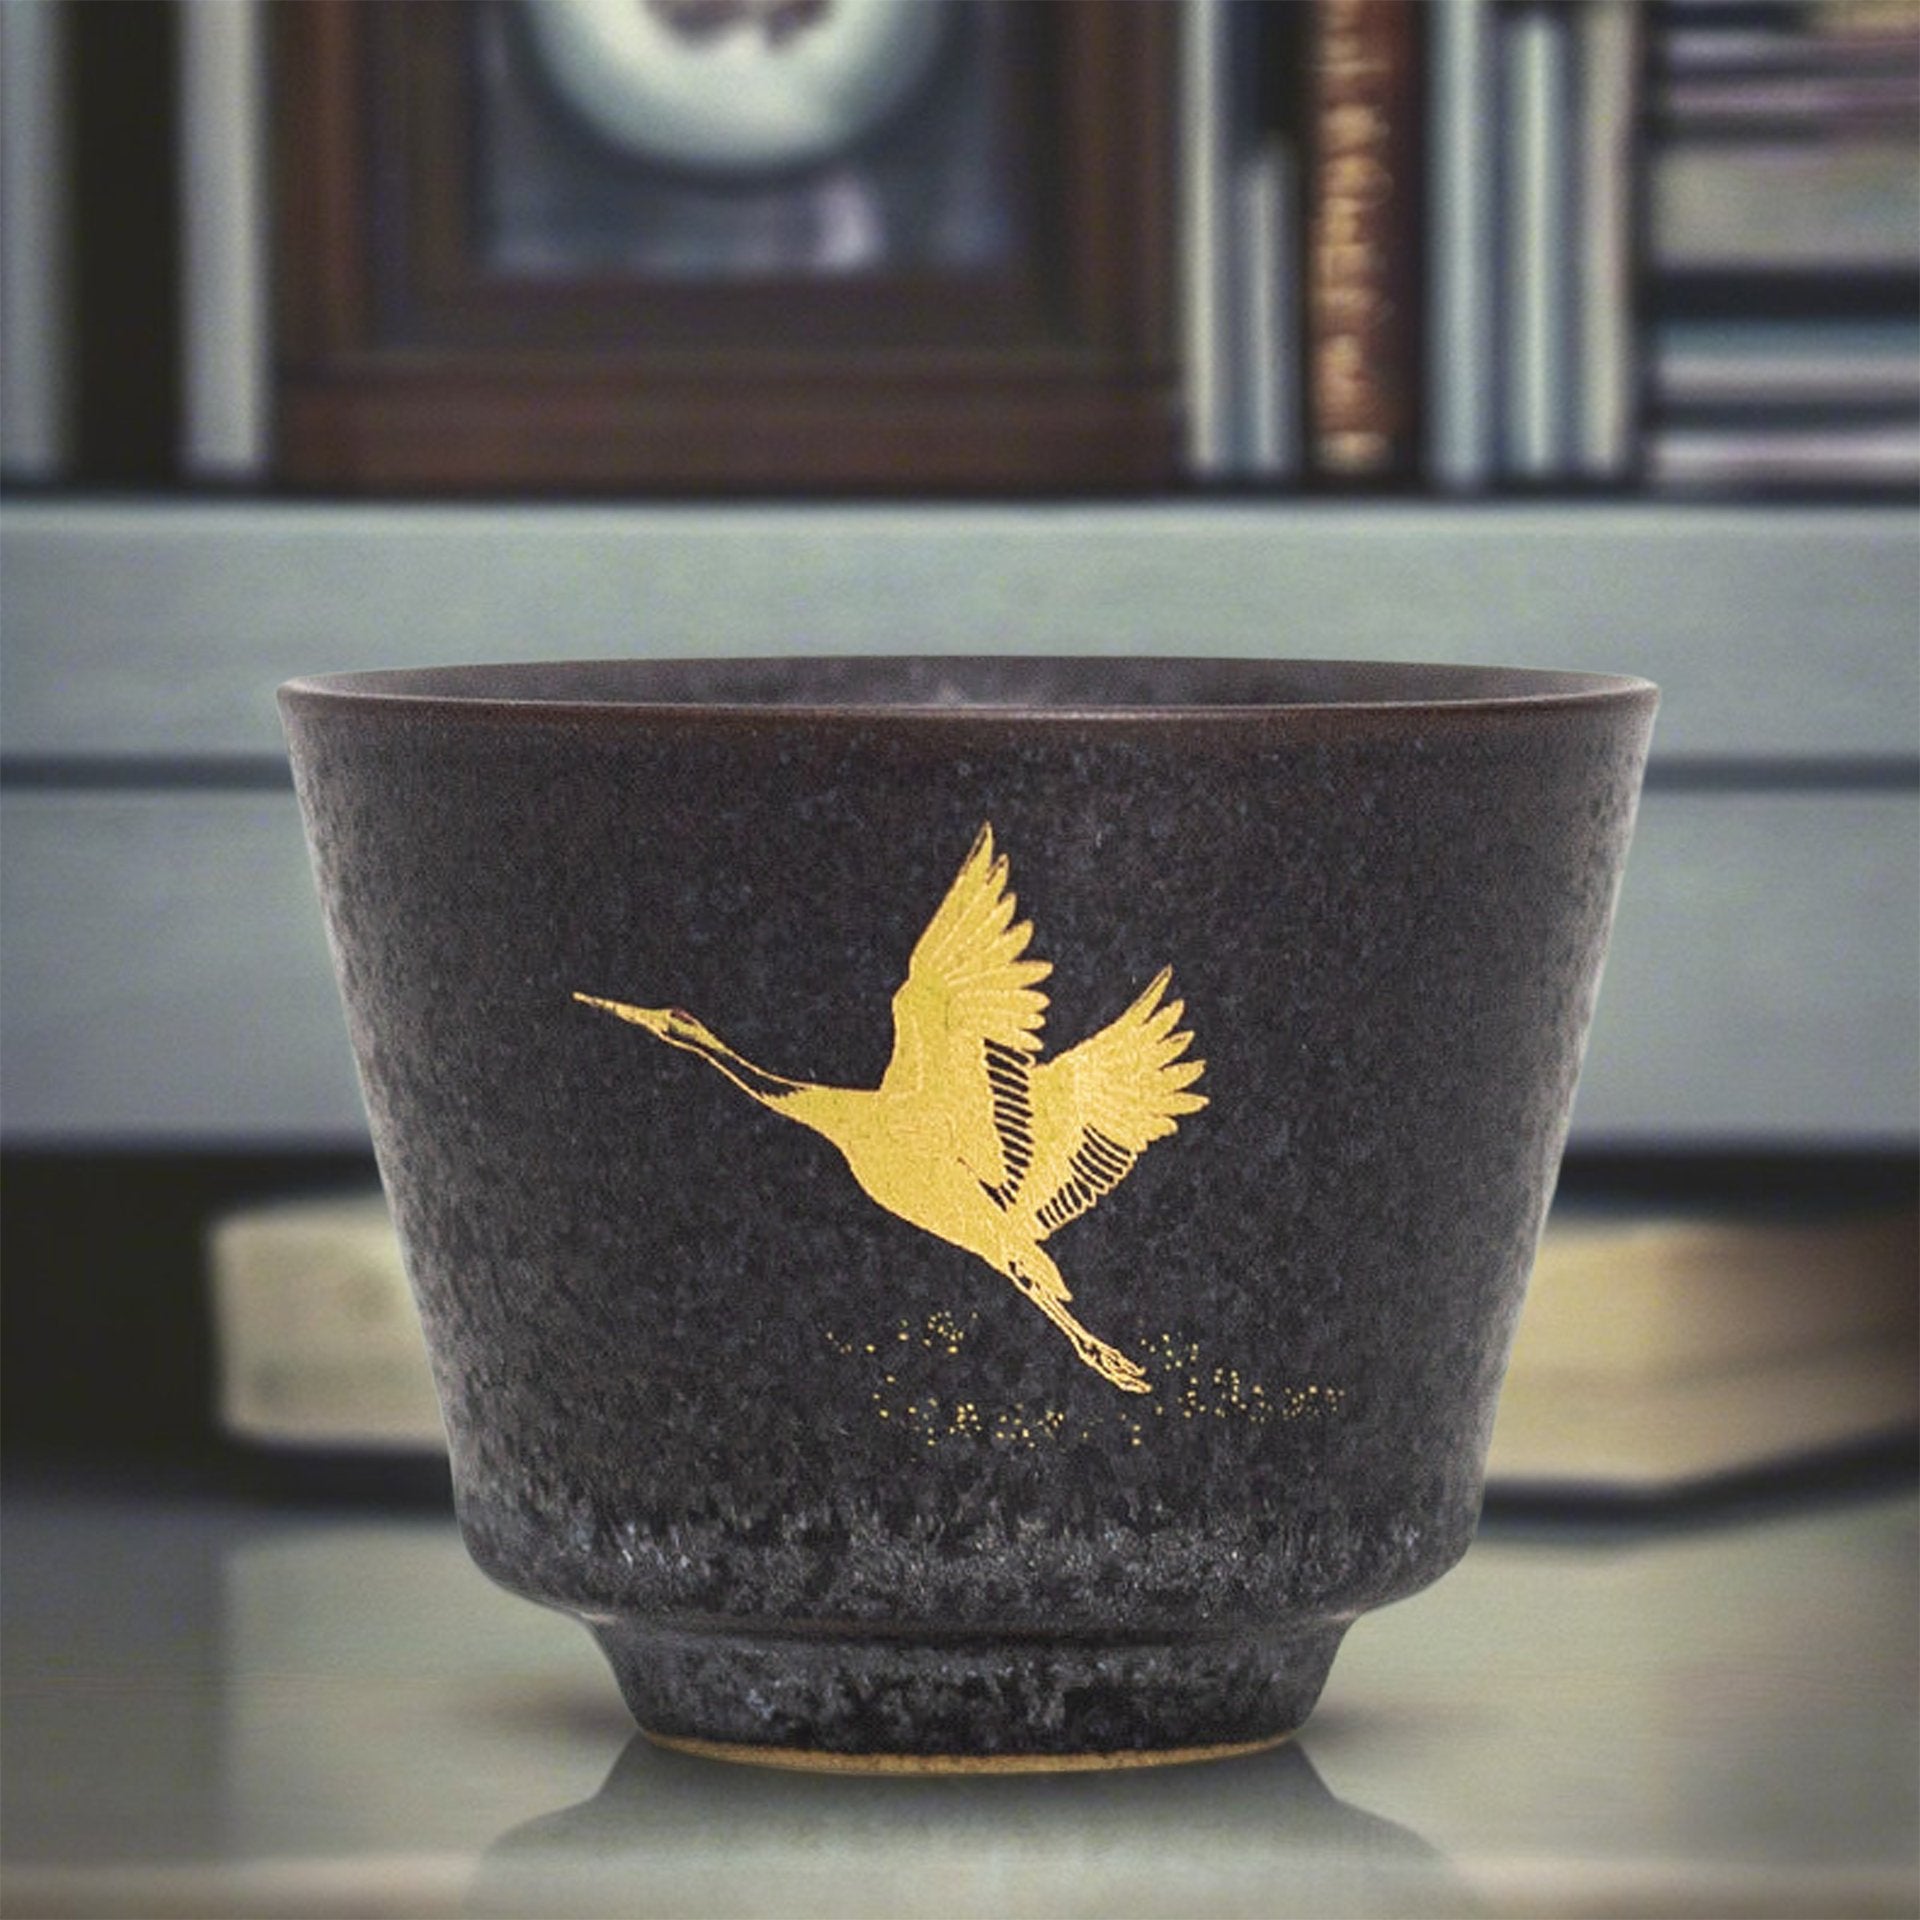 Dark Japanese teacup.